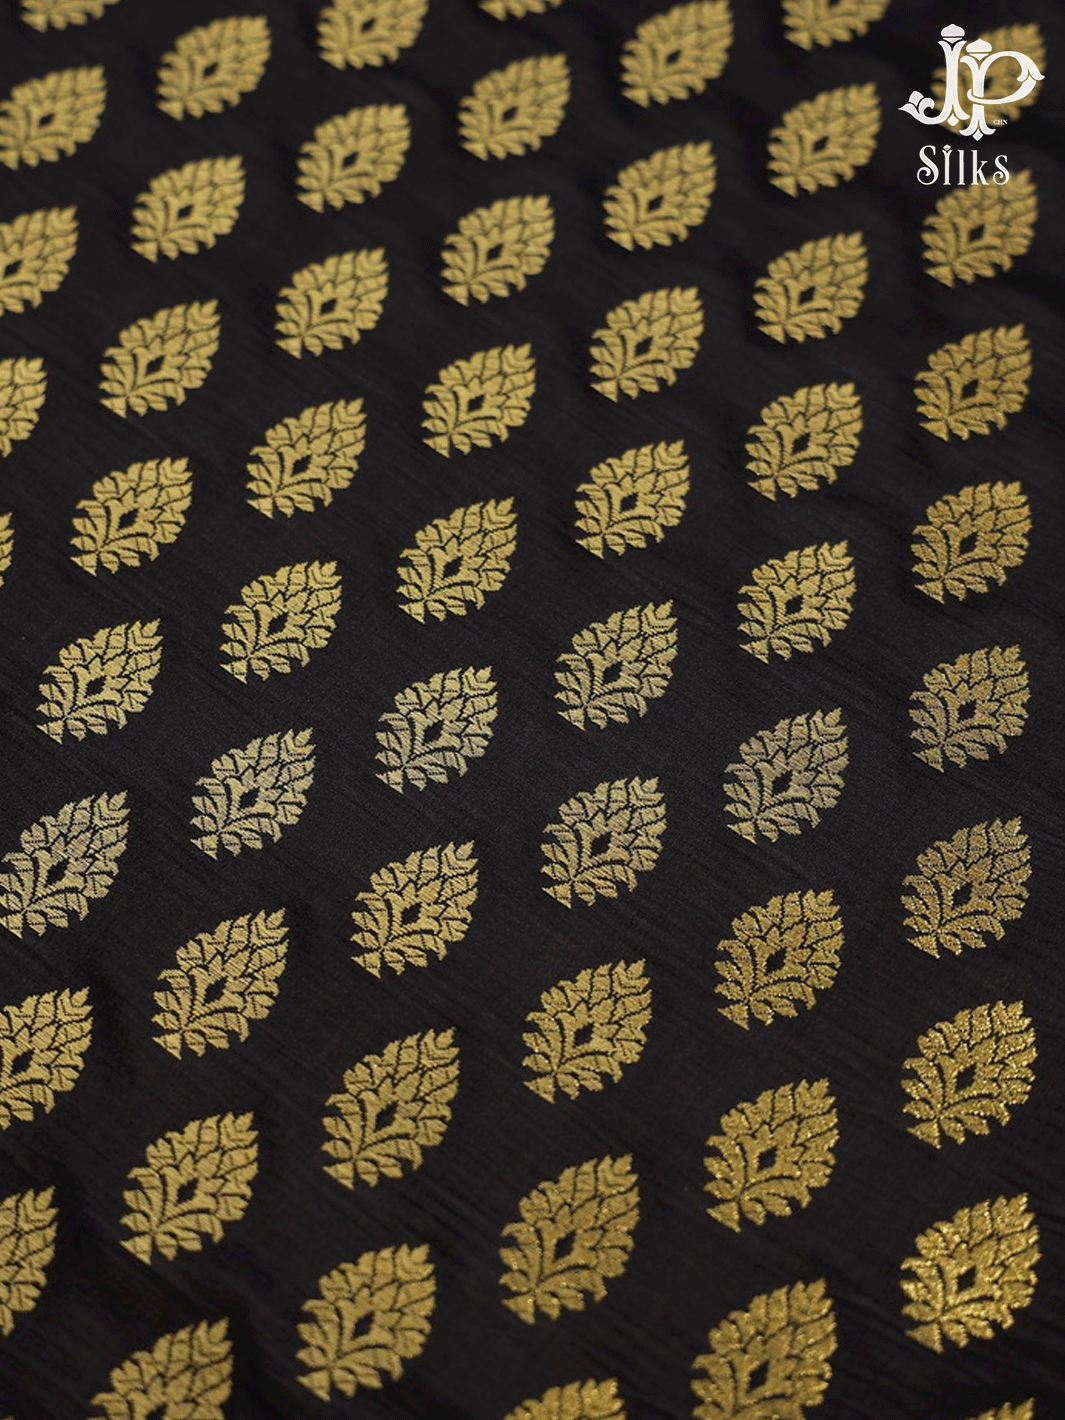 Black Banarasi Brocade Fabric - C845 - View 2